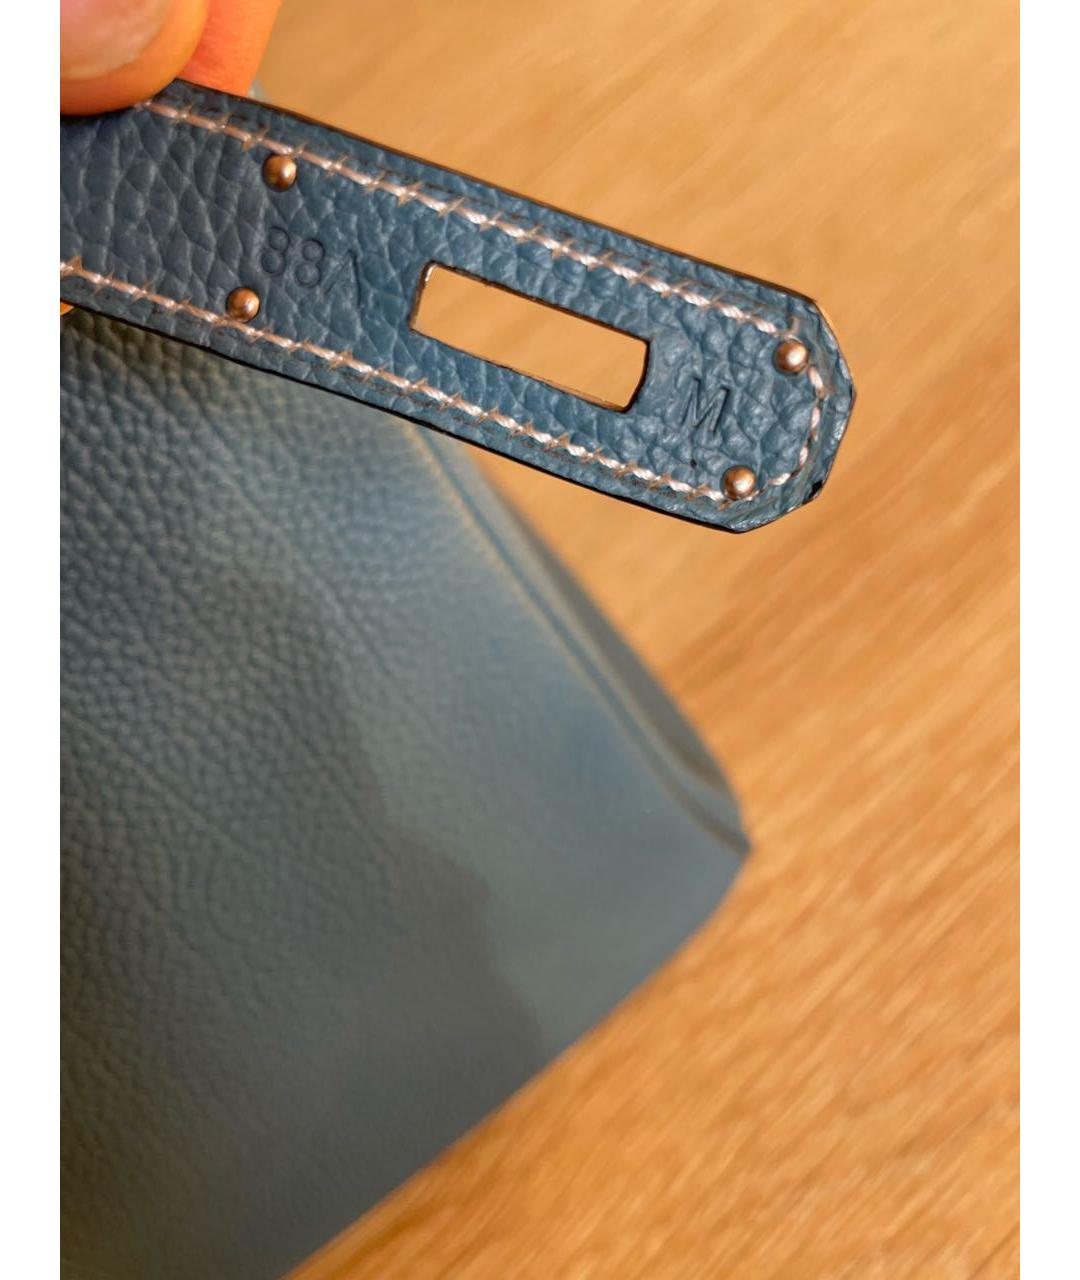 HERMES PRE-OWNED Голубая кожаная сумка с короткими ручками, фото 7